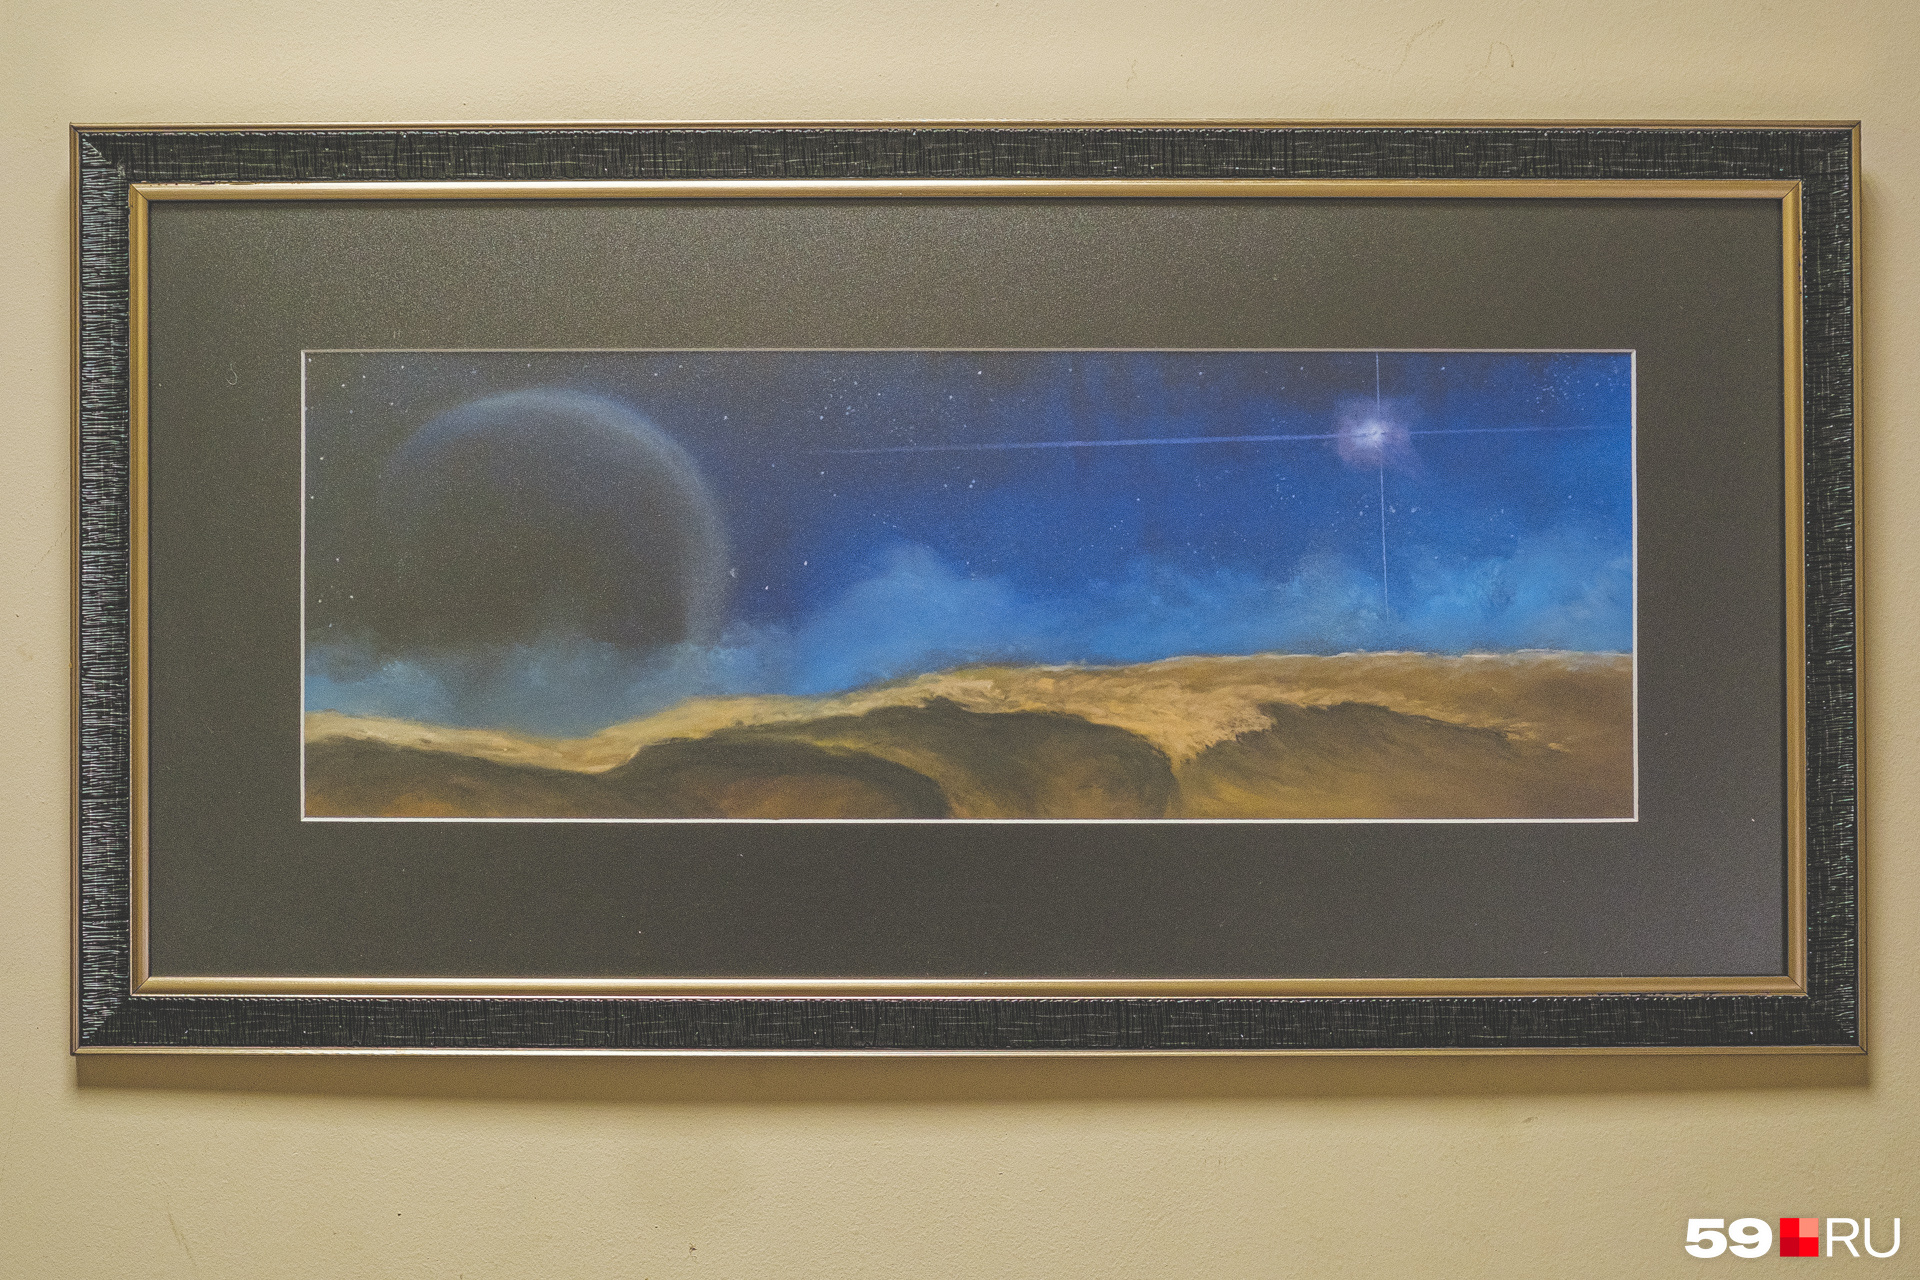 Одна из картин на тему космоса висит у Андрея Николаевича на работе